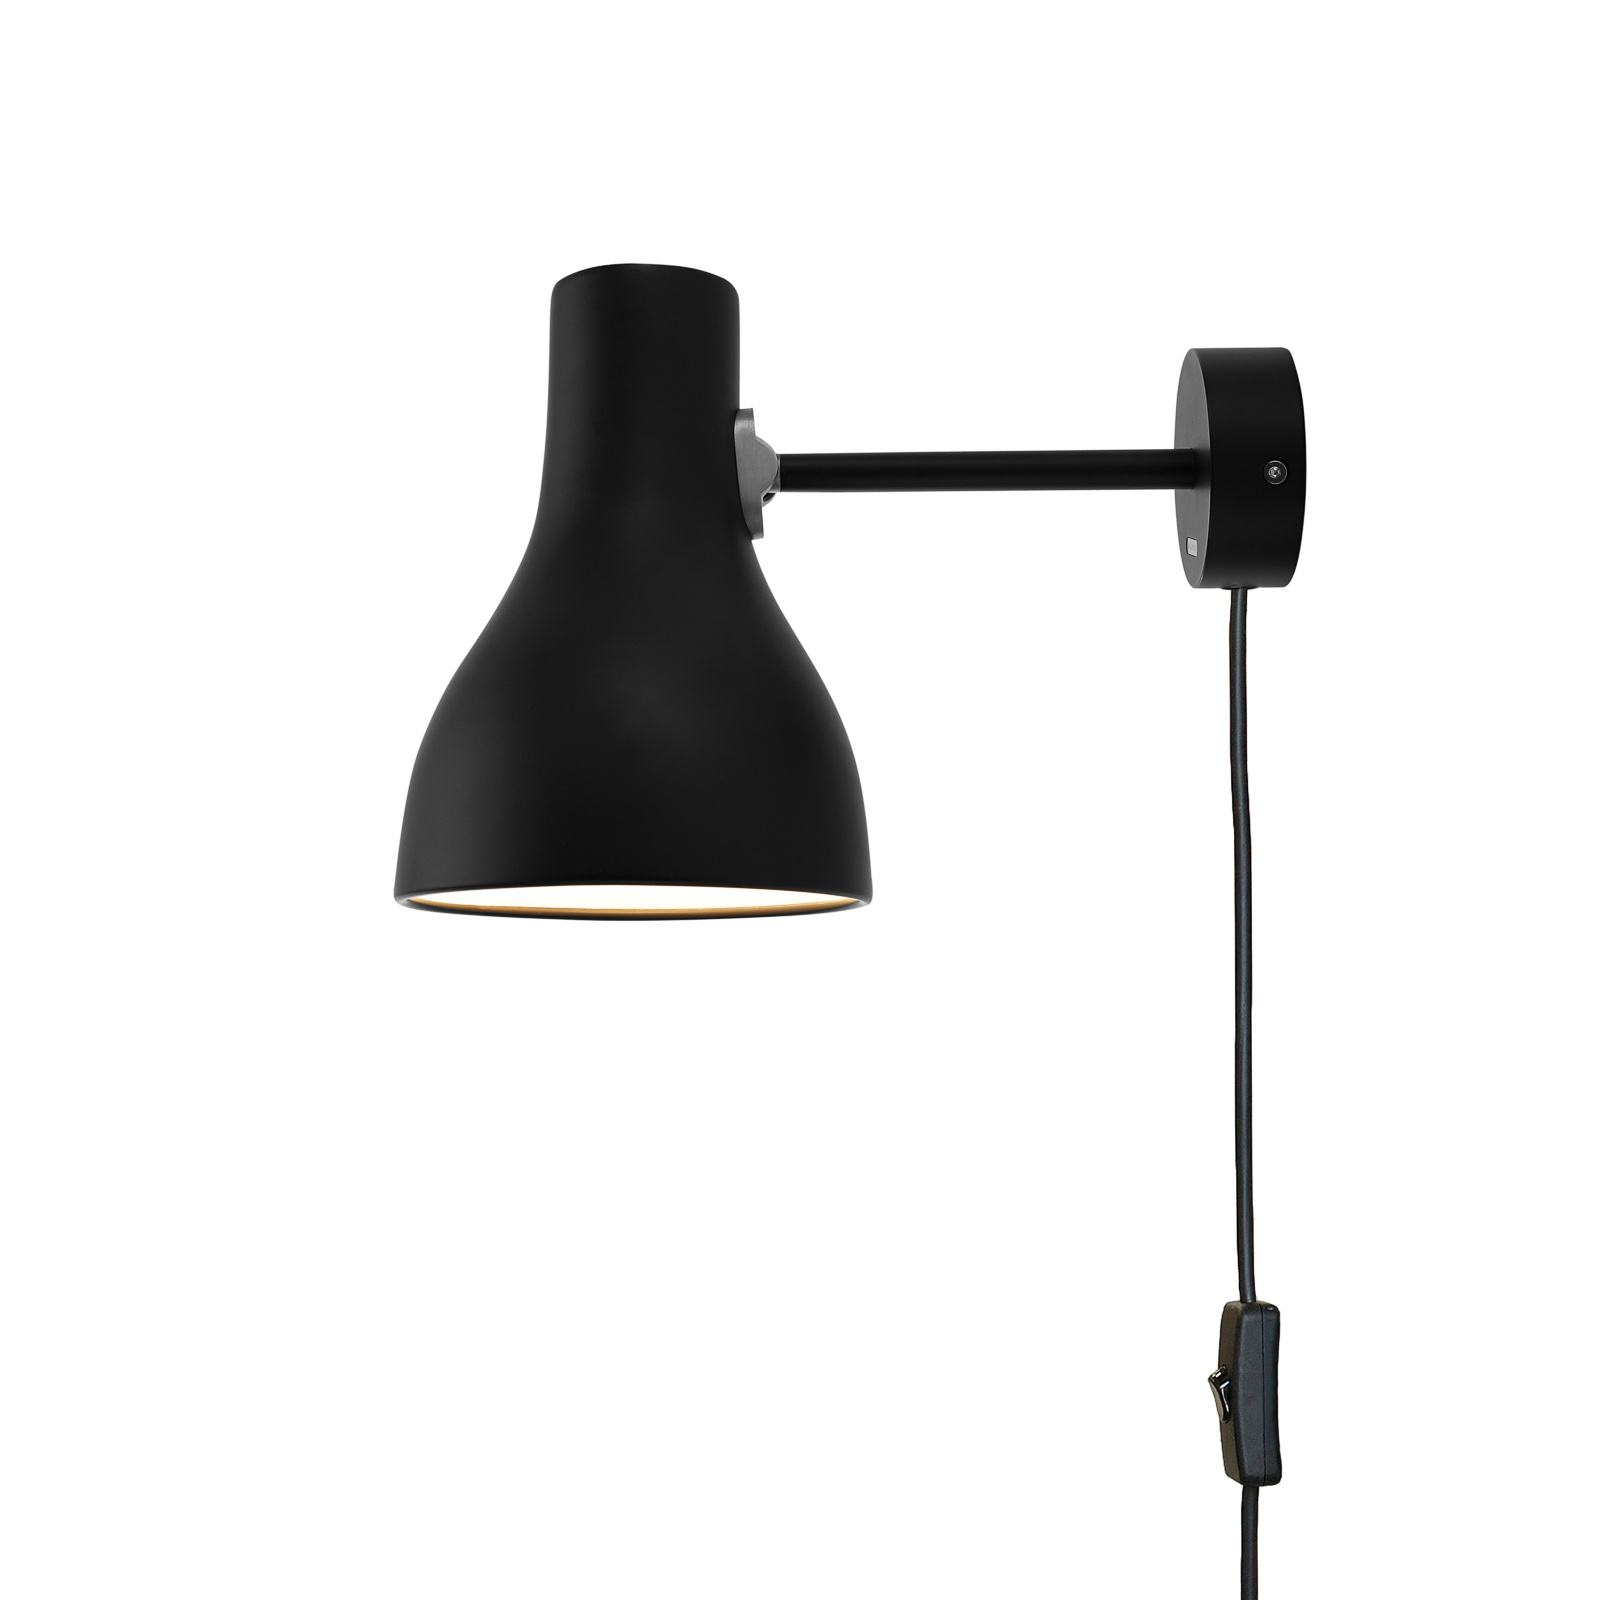 Anglepoise Type 75 wall light with plug, black